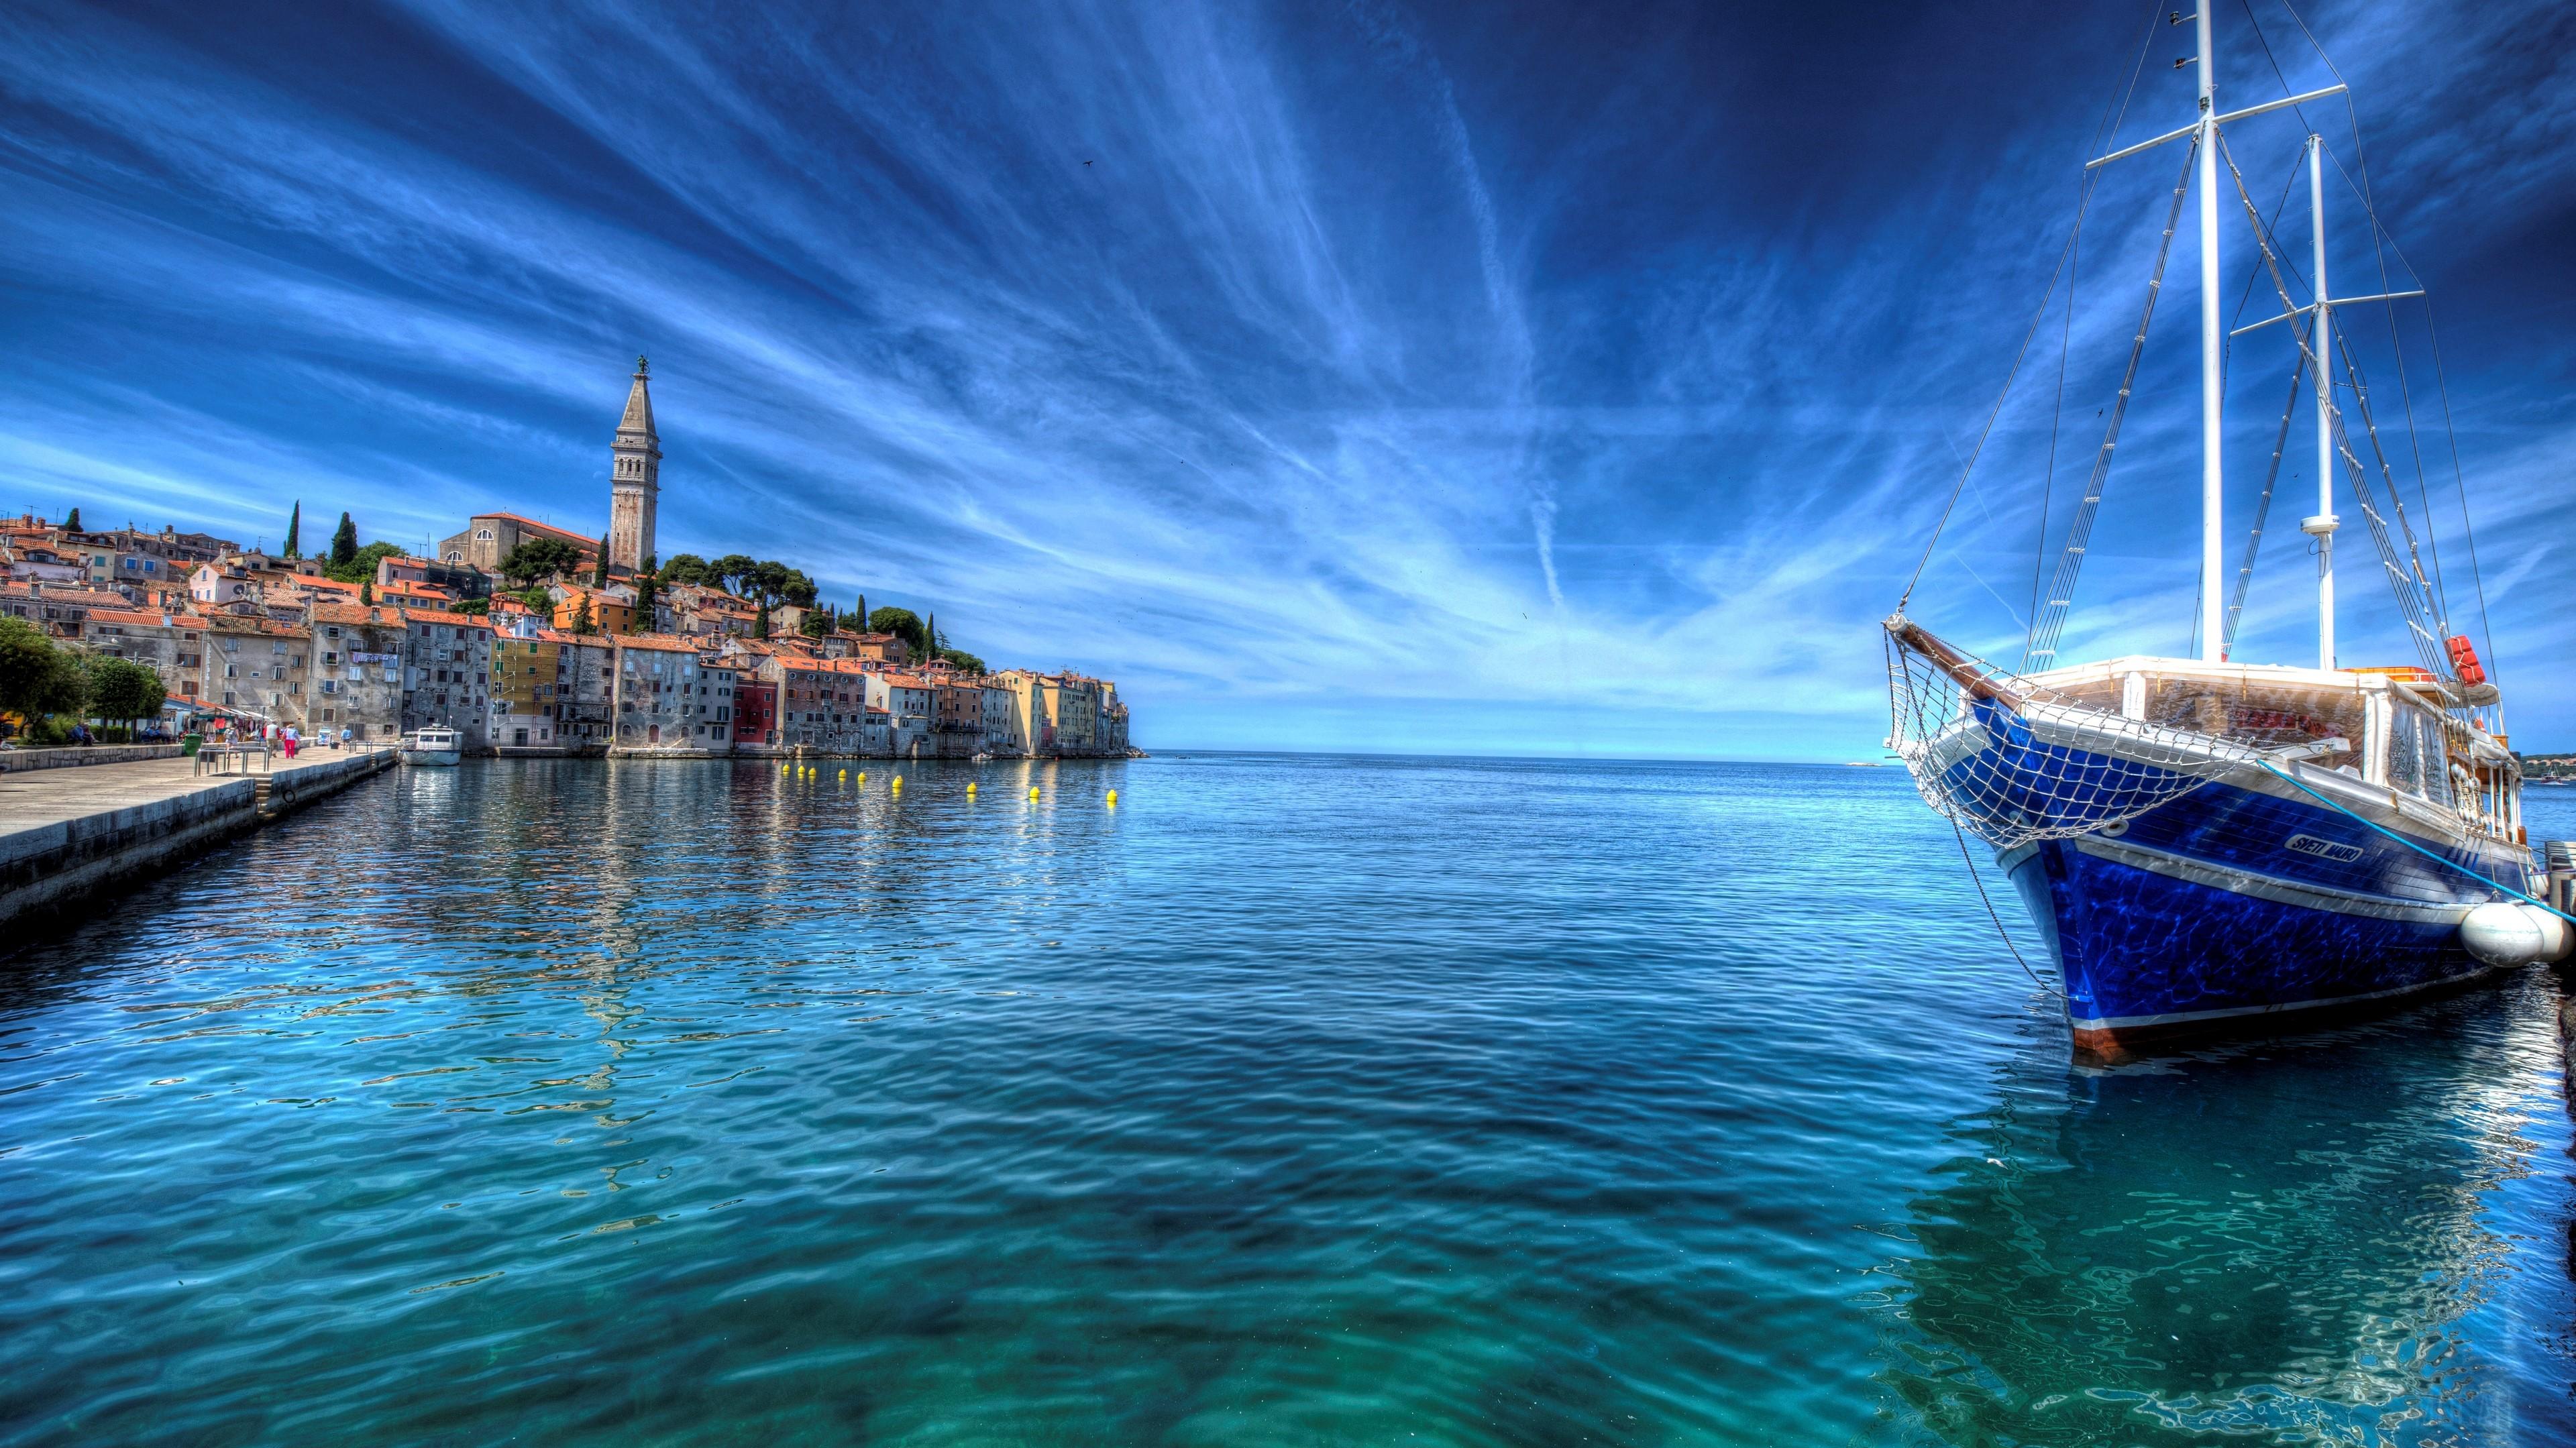 Adriatic Sea 1080p 2k 4k HD Wallpaper Background